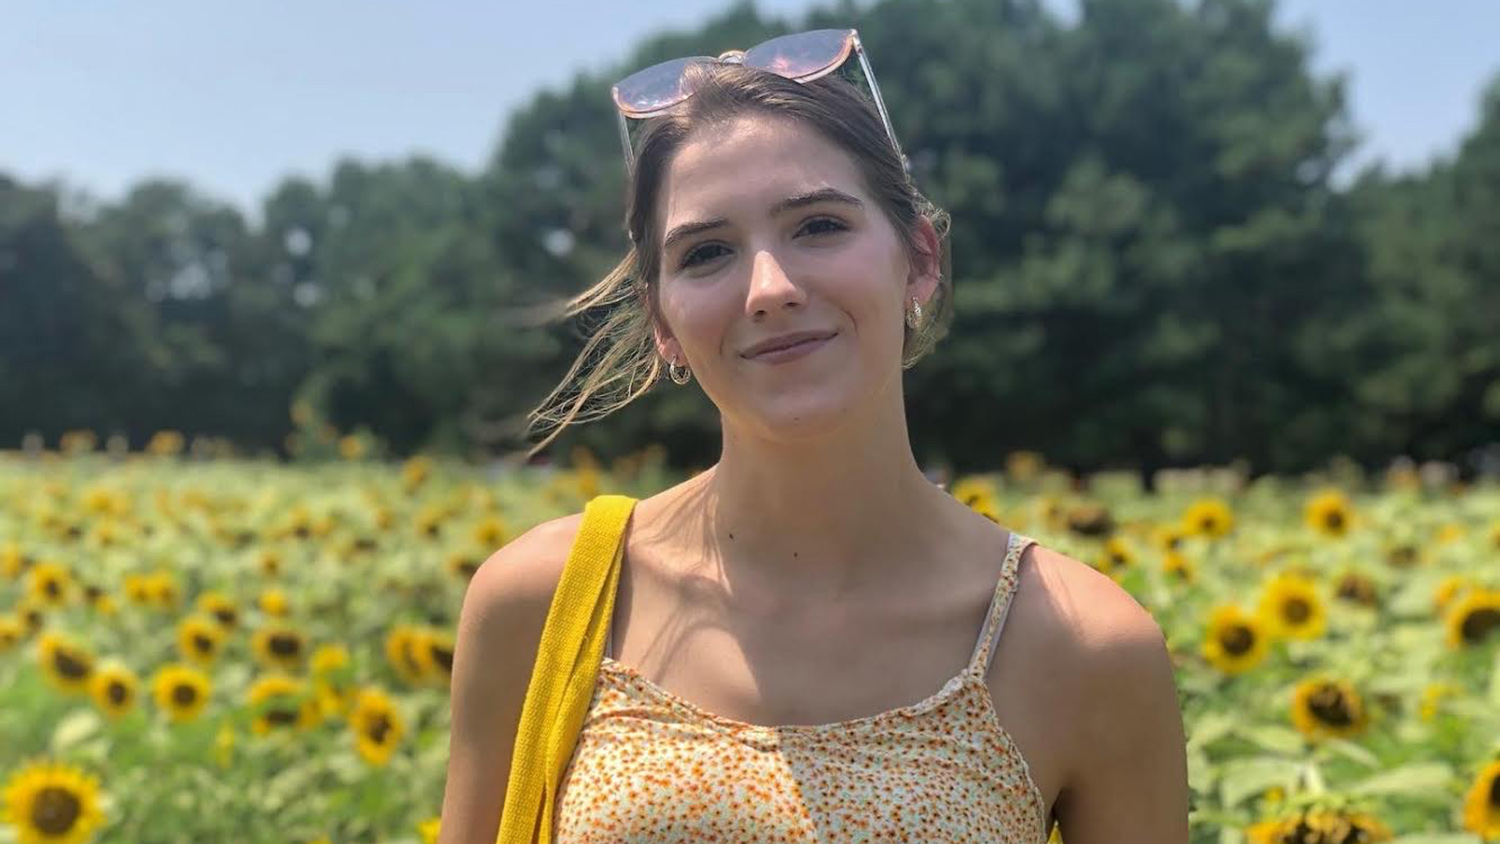 Sophie Korenek standing in front of sunflowers